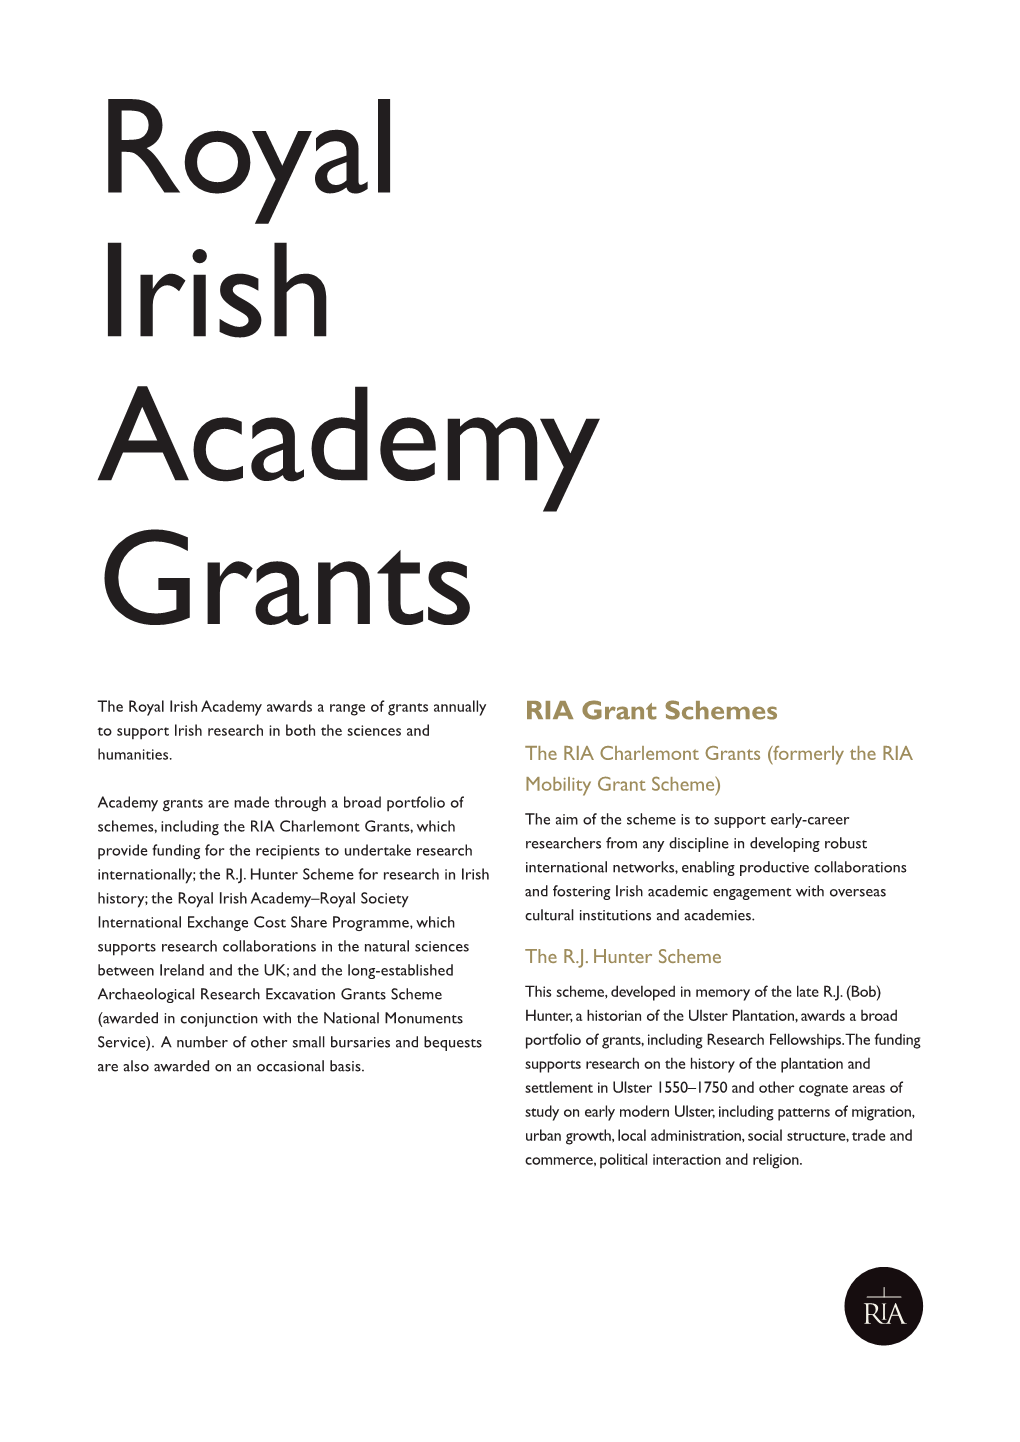 Royal Irish Academy Grants